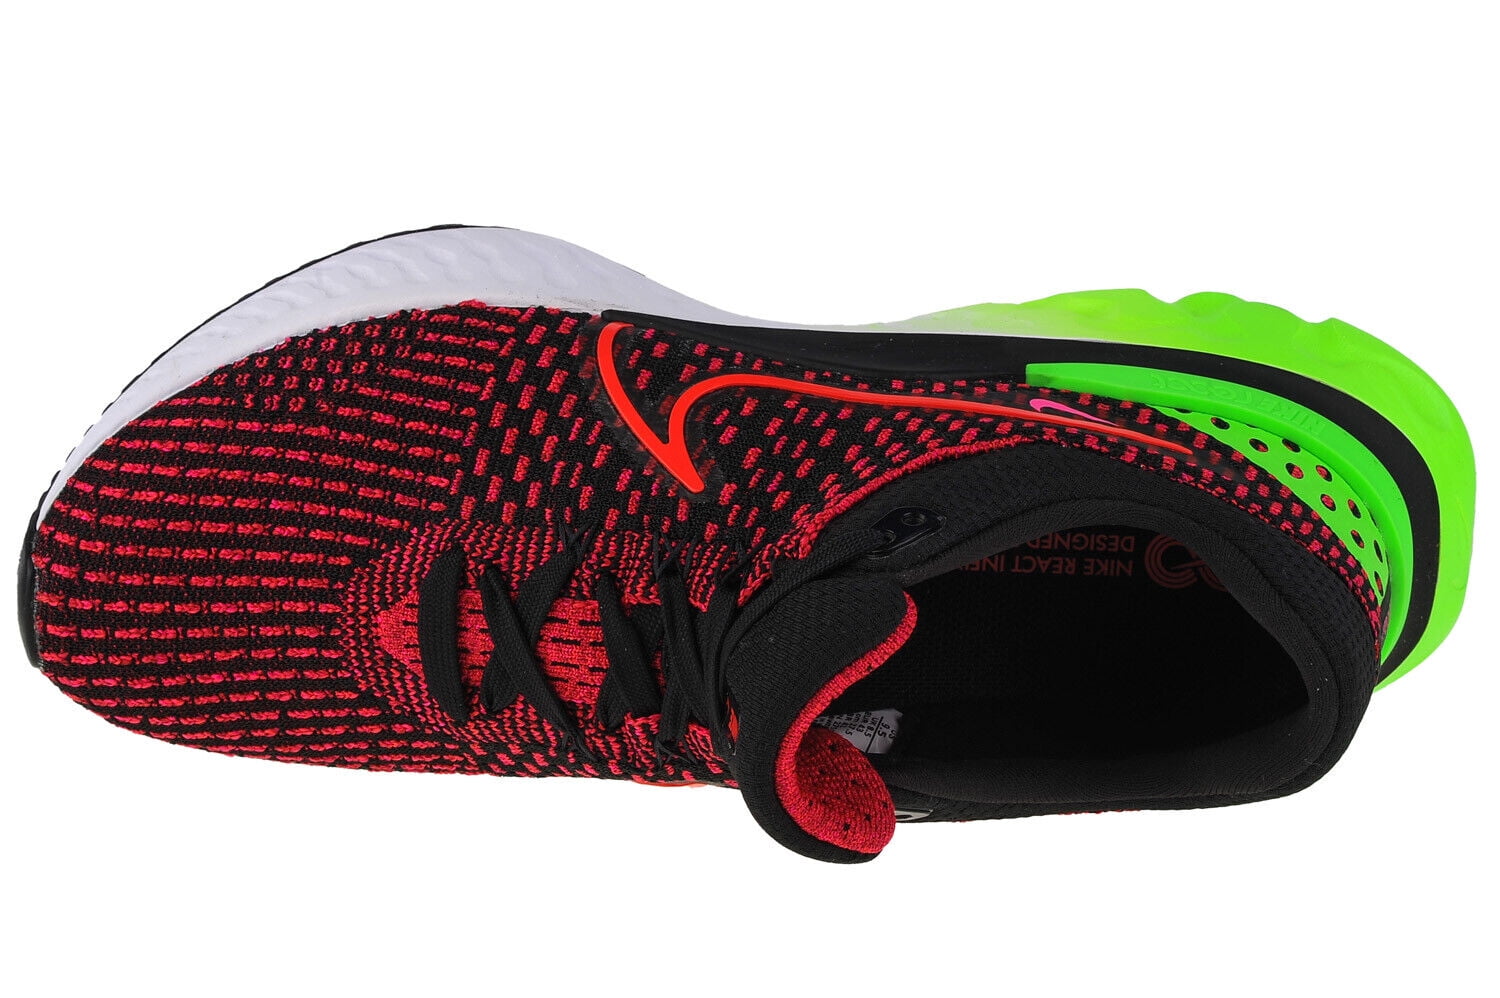 Nike Men React Infinity Run FK 3 Running shoe DH5392 003 size 10.5 US New  in Box